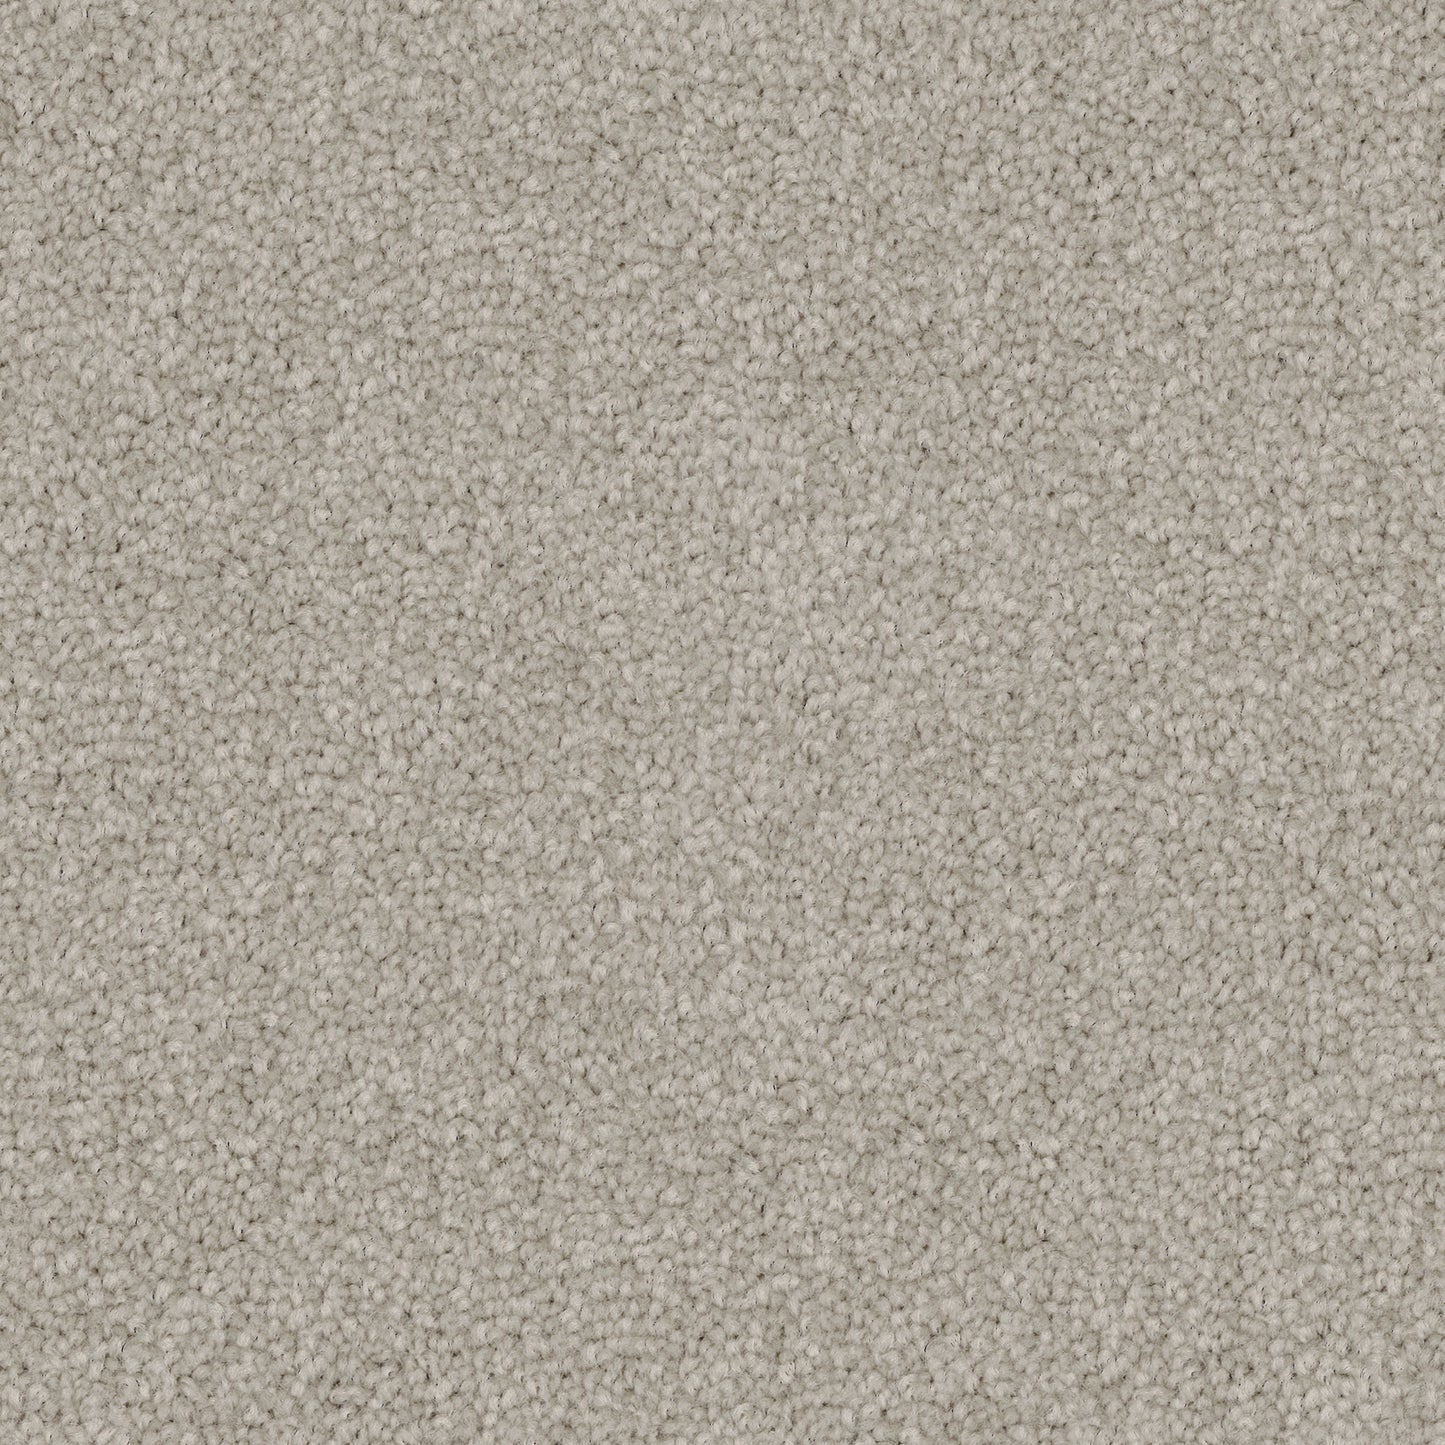 Poly25 Polyester Carpet Deep Grey